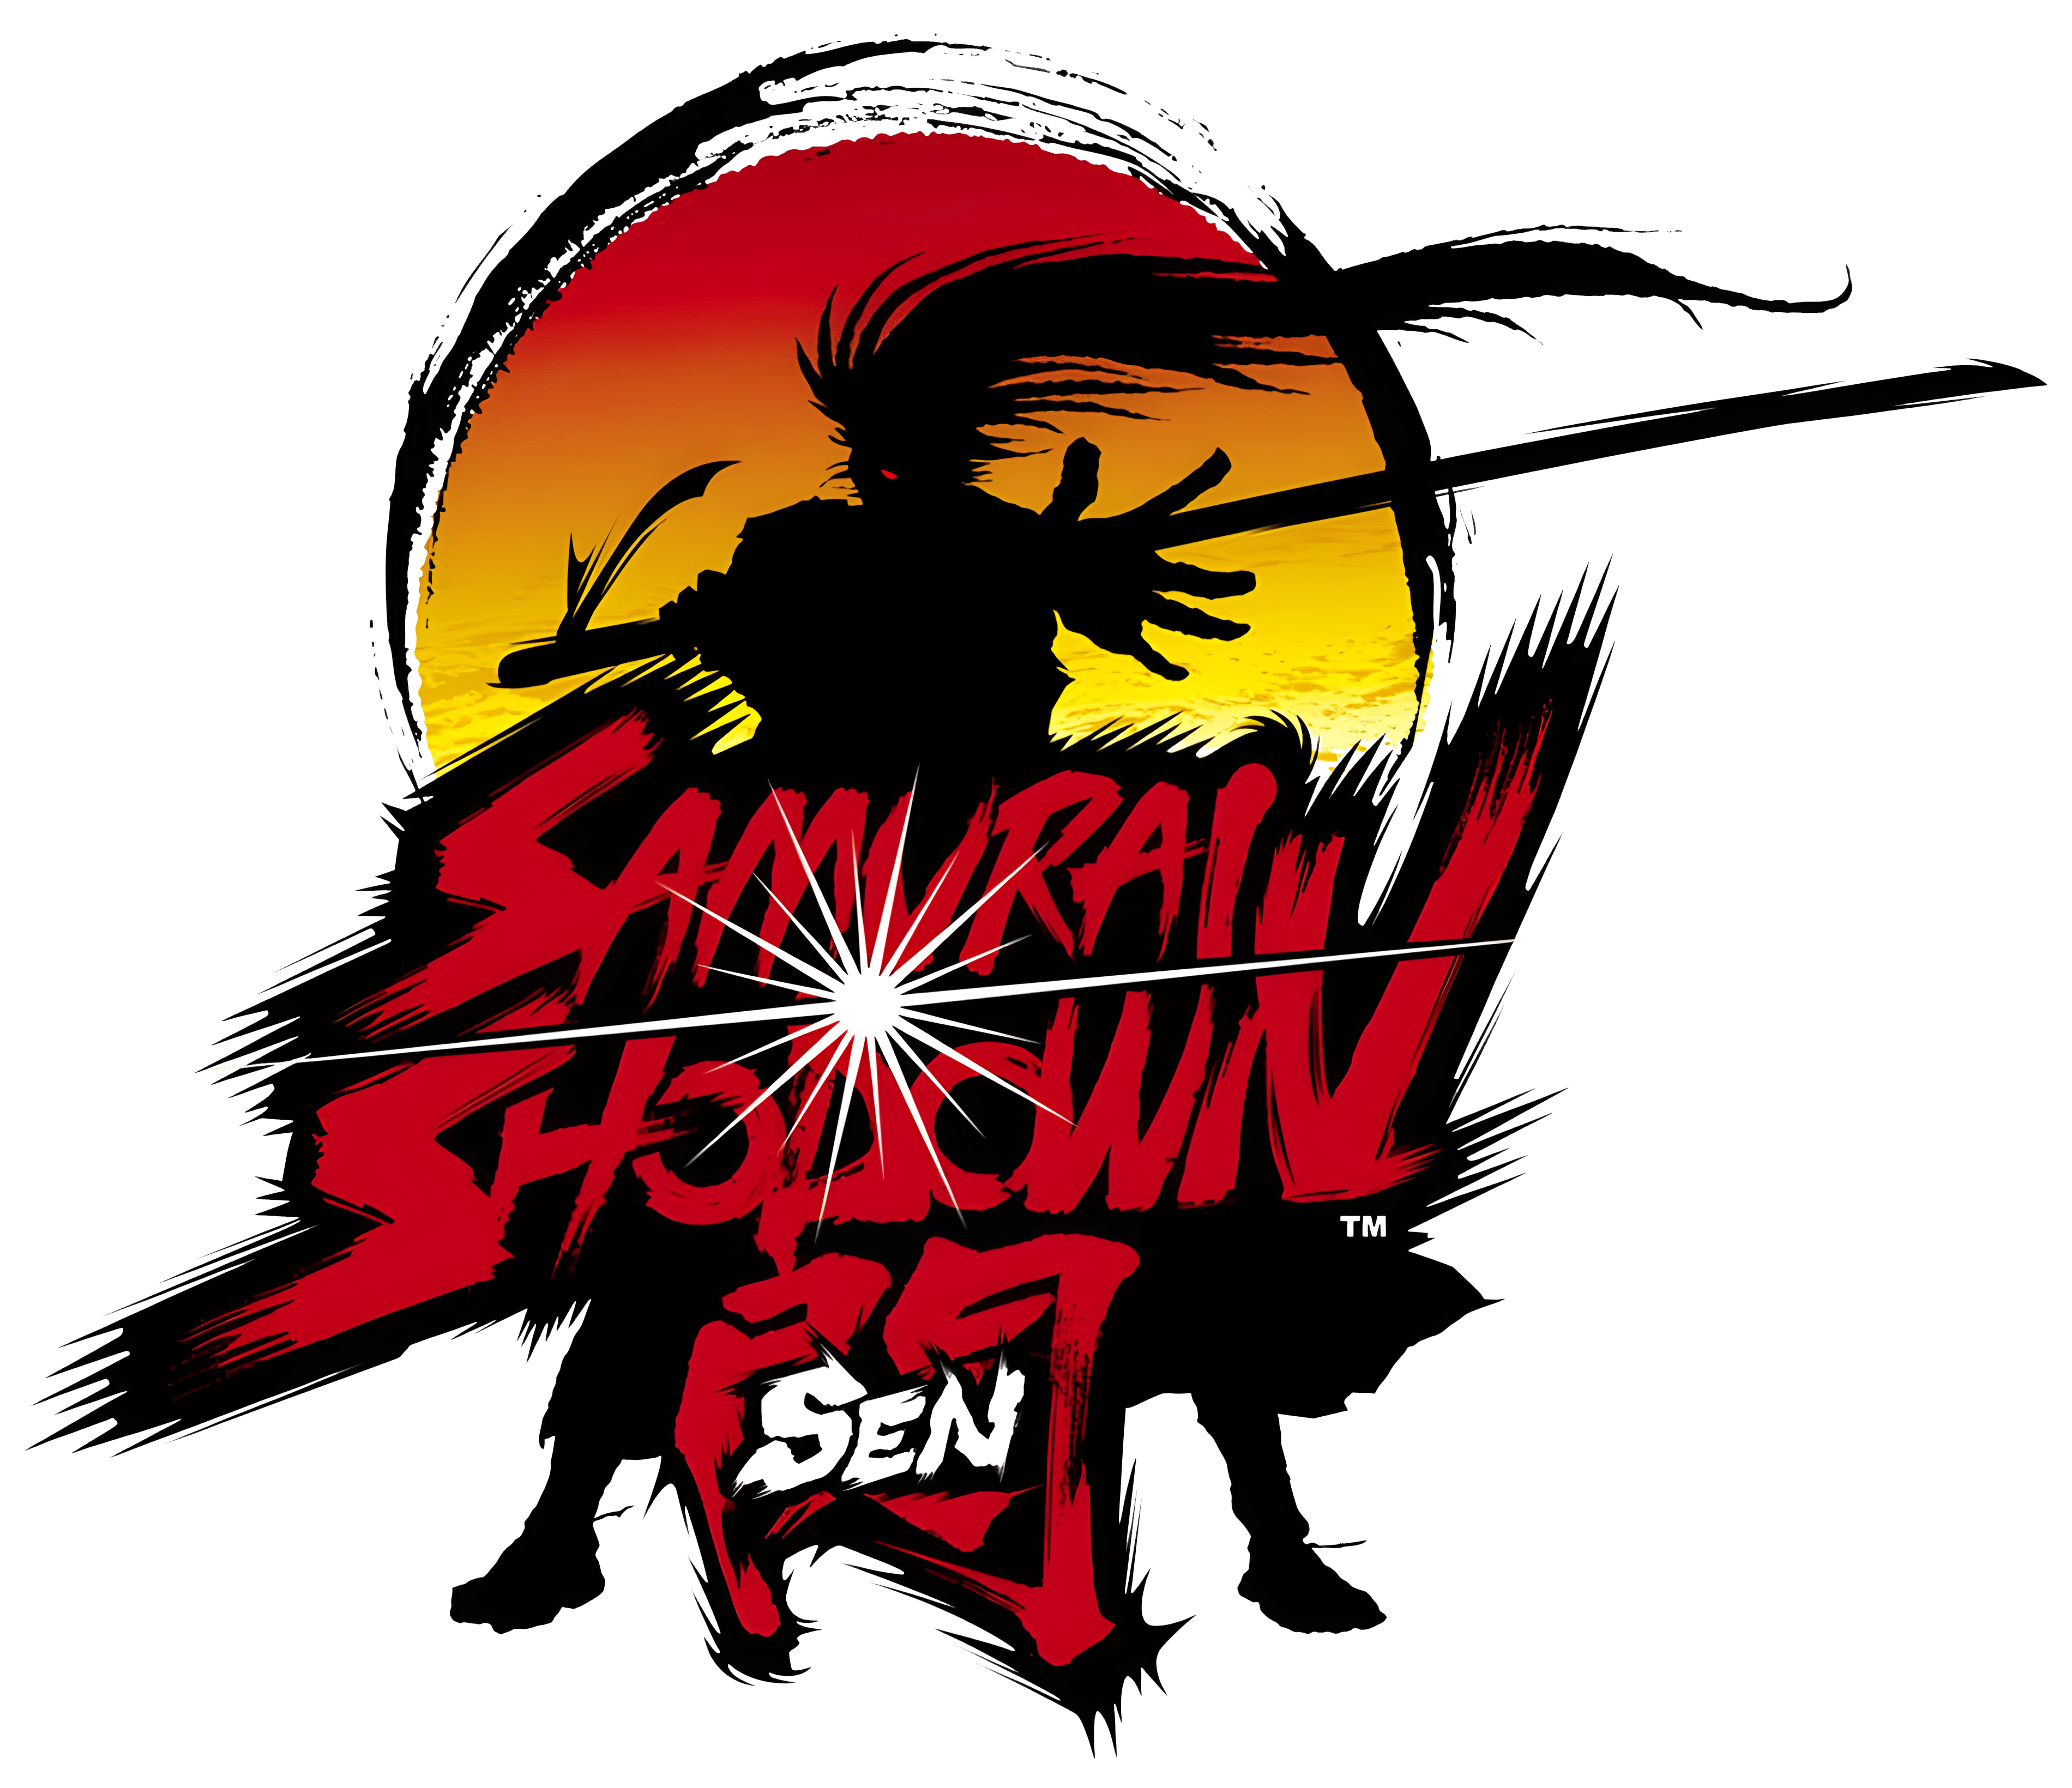 Samurai Shodown Sen Images - LaunchBox Games Database